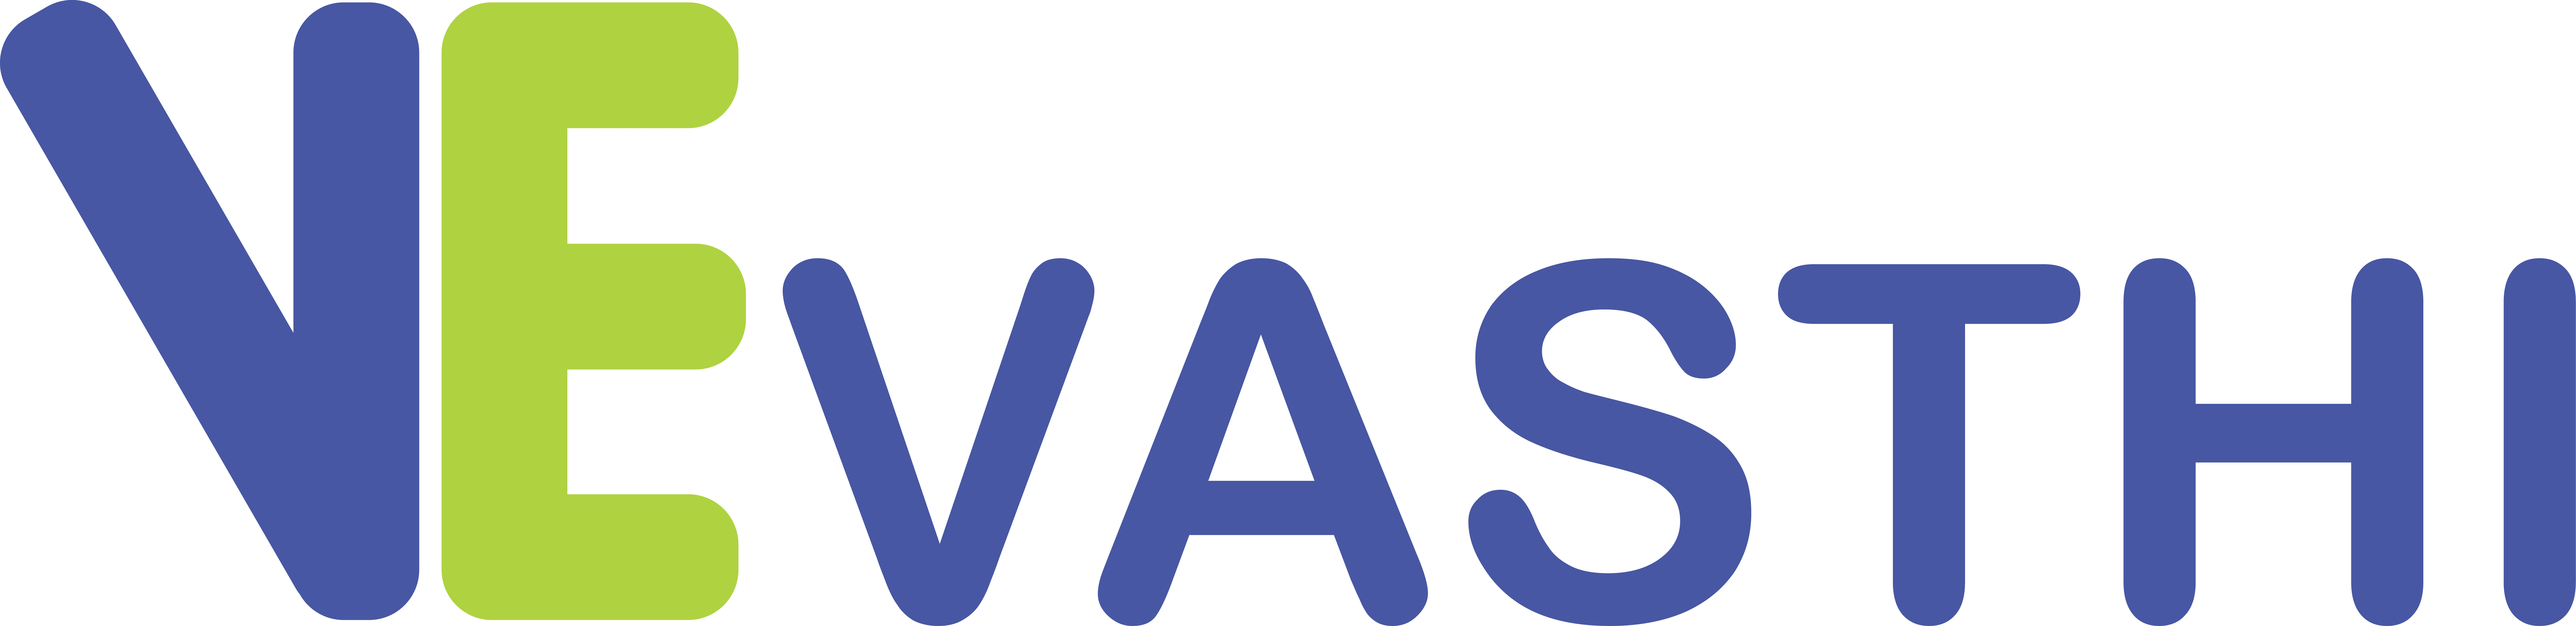 Company Logo For Vasthi Instruments'